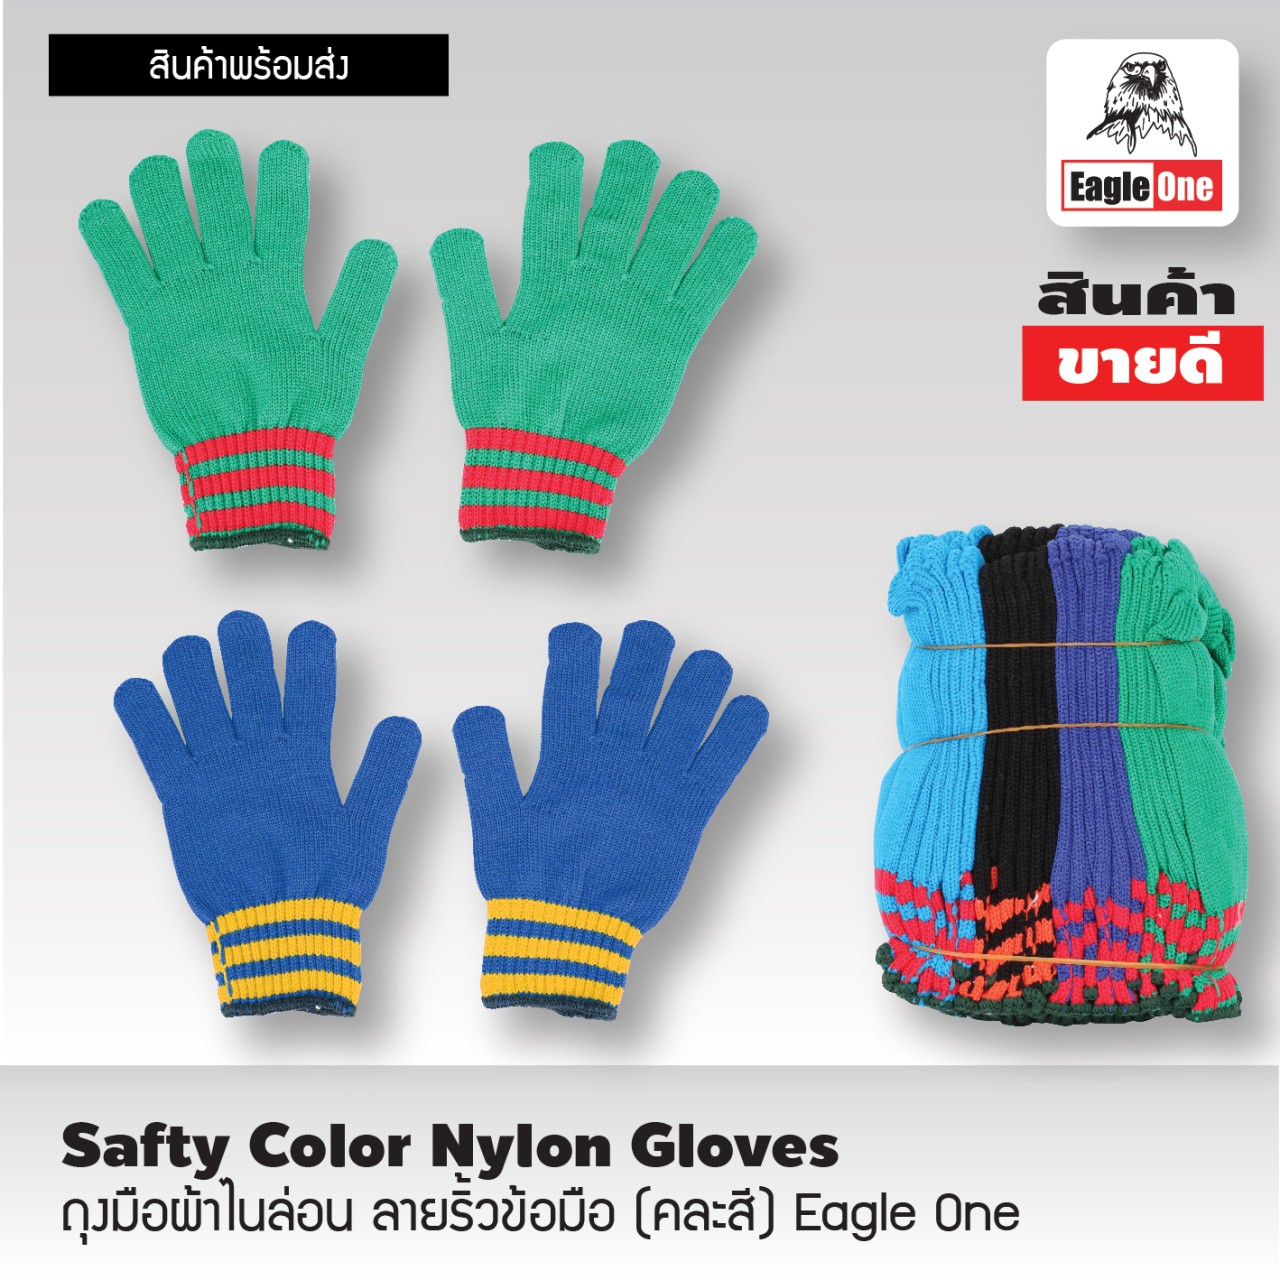 Eagle One ถุงมือผ้าไนล่อน ลายริ้วข้อมือ (คละสี) Eagle One Safty Color Nylon Gloves บรรจุห่อละ 10 โหล สินค้ารับประกันคุณภาพ